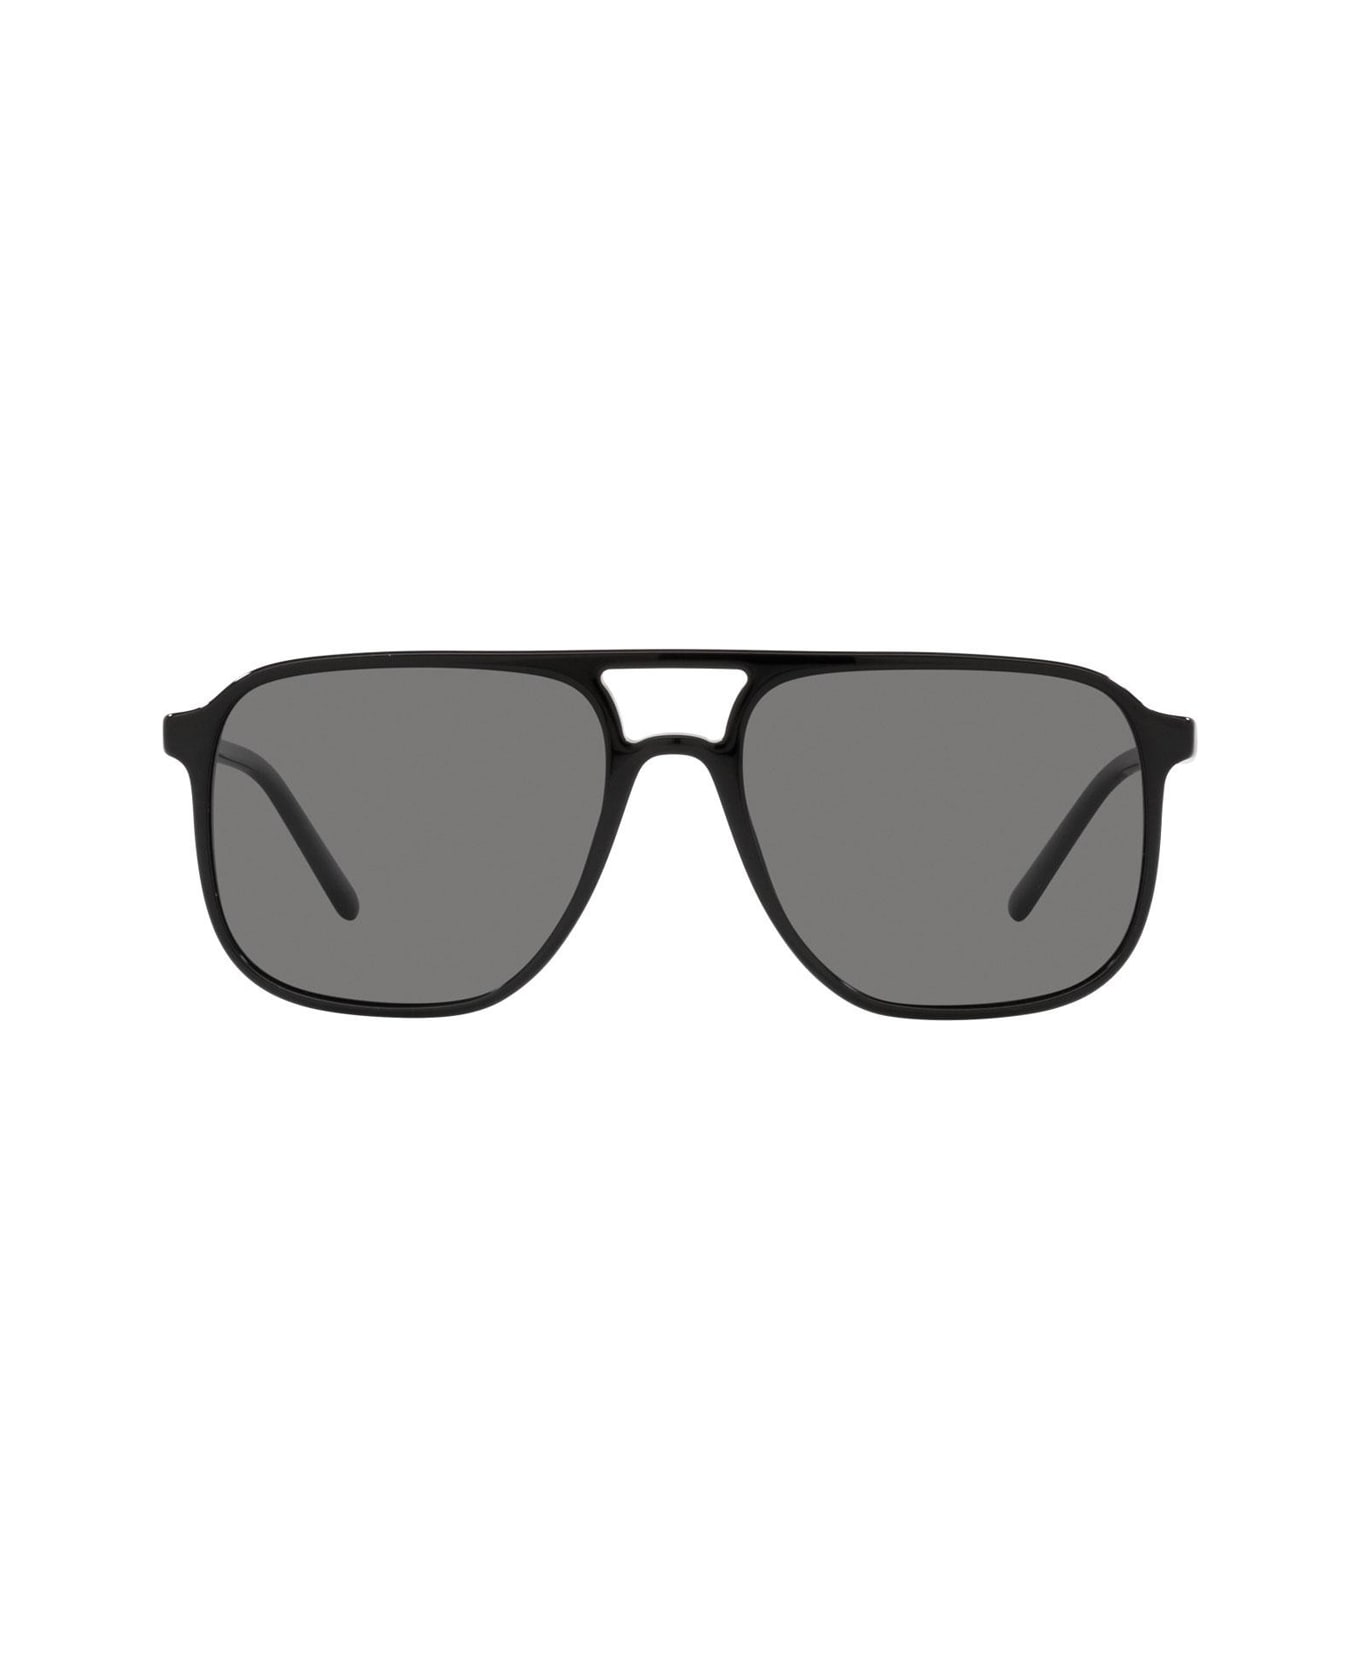 Dolce & Gabbana Eyewear Dg4423 501/81 Sunglasses - Nero